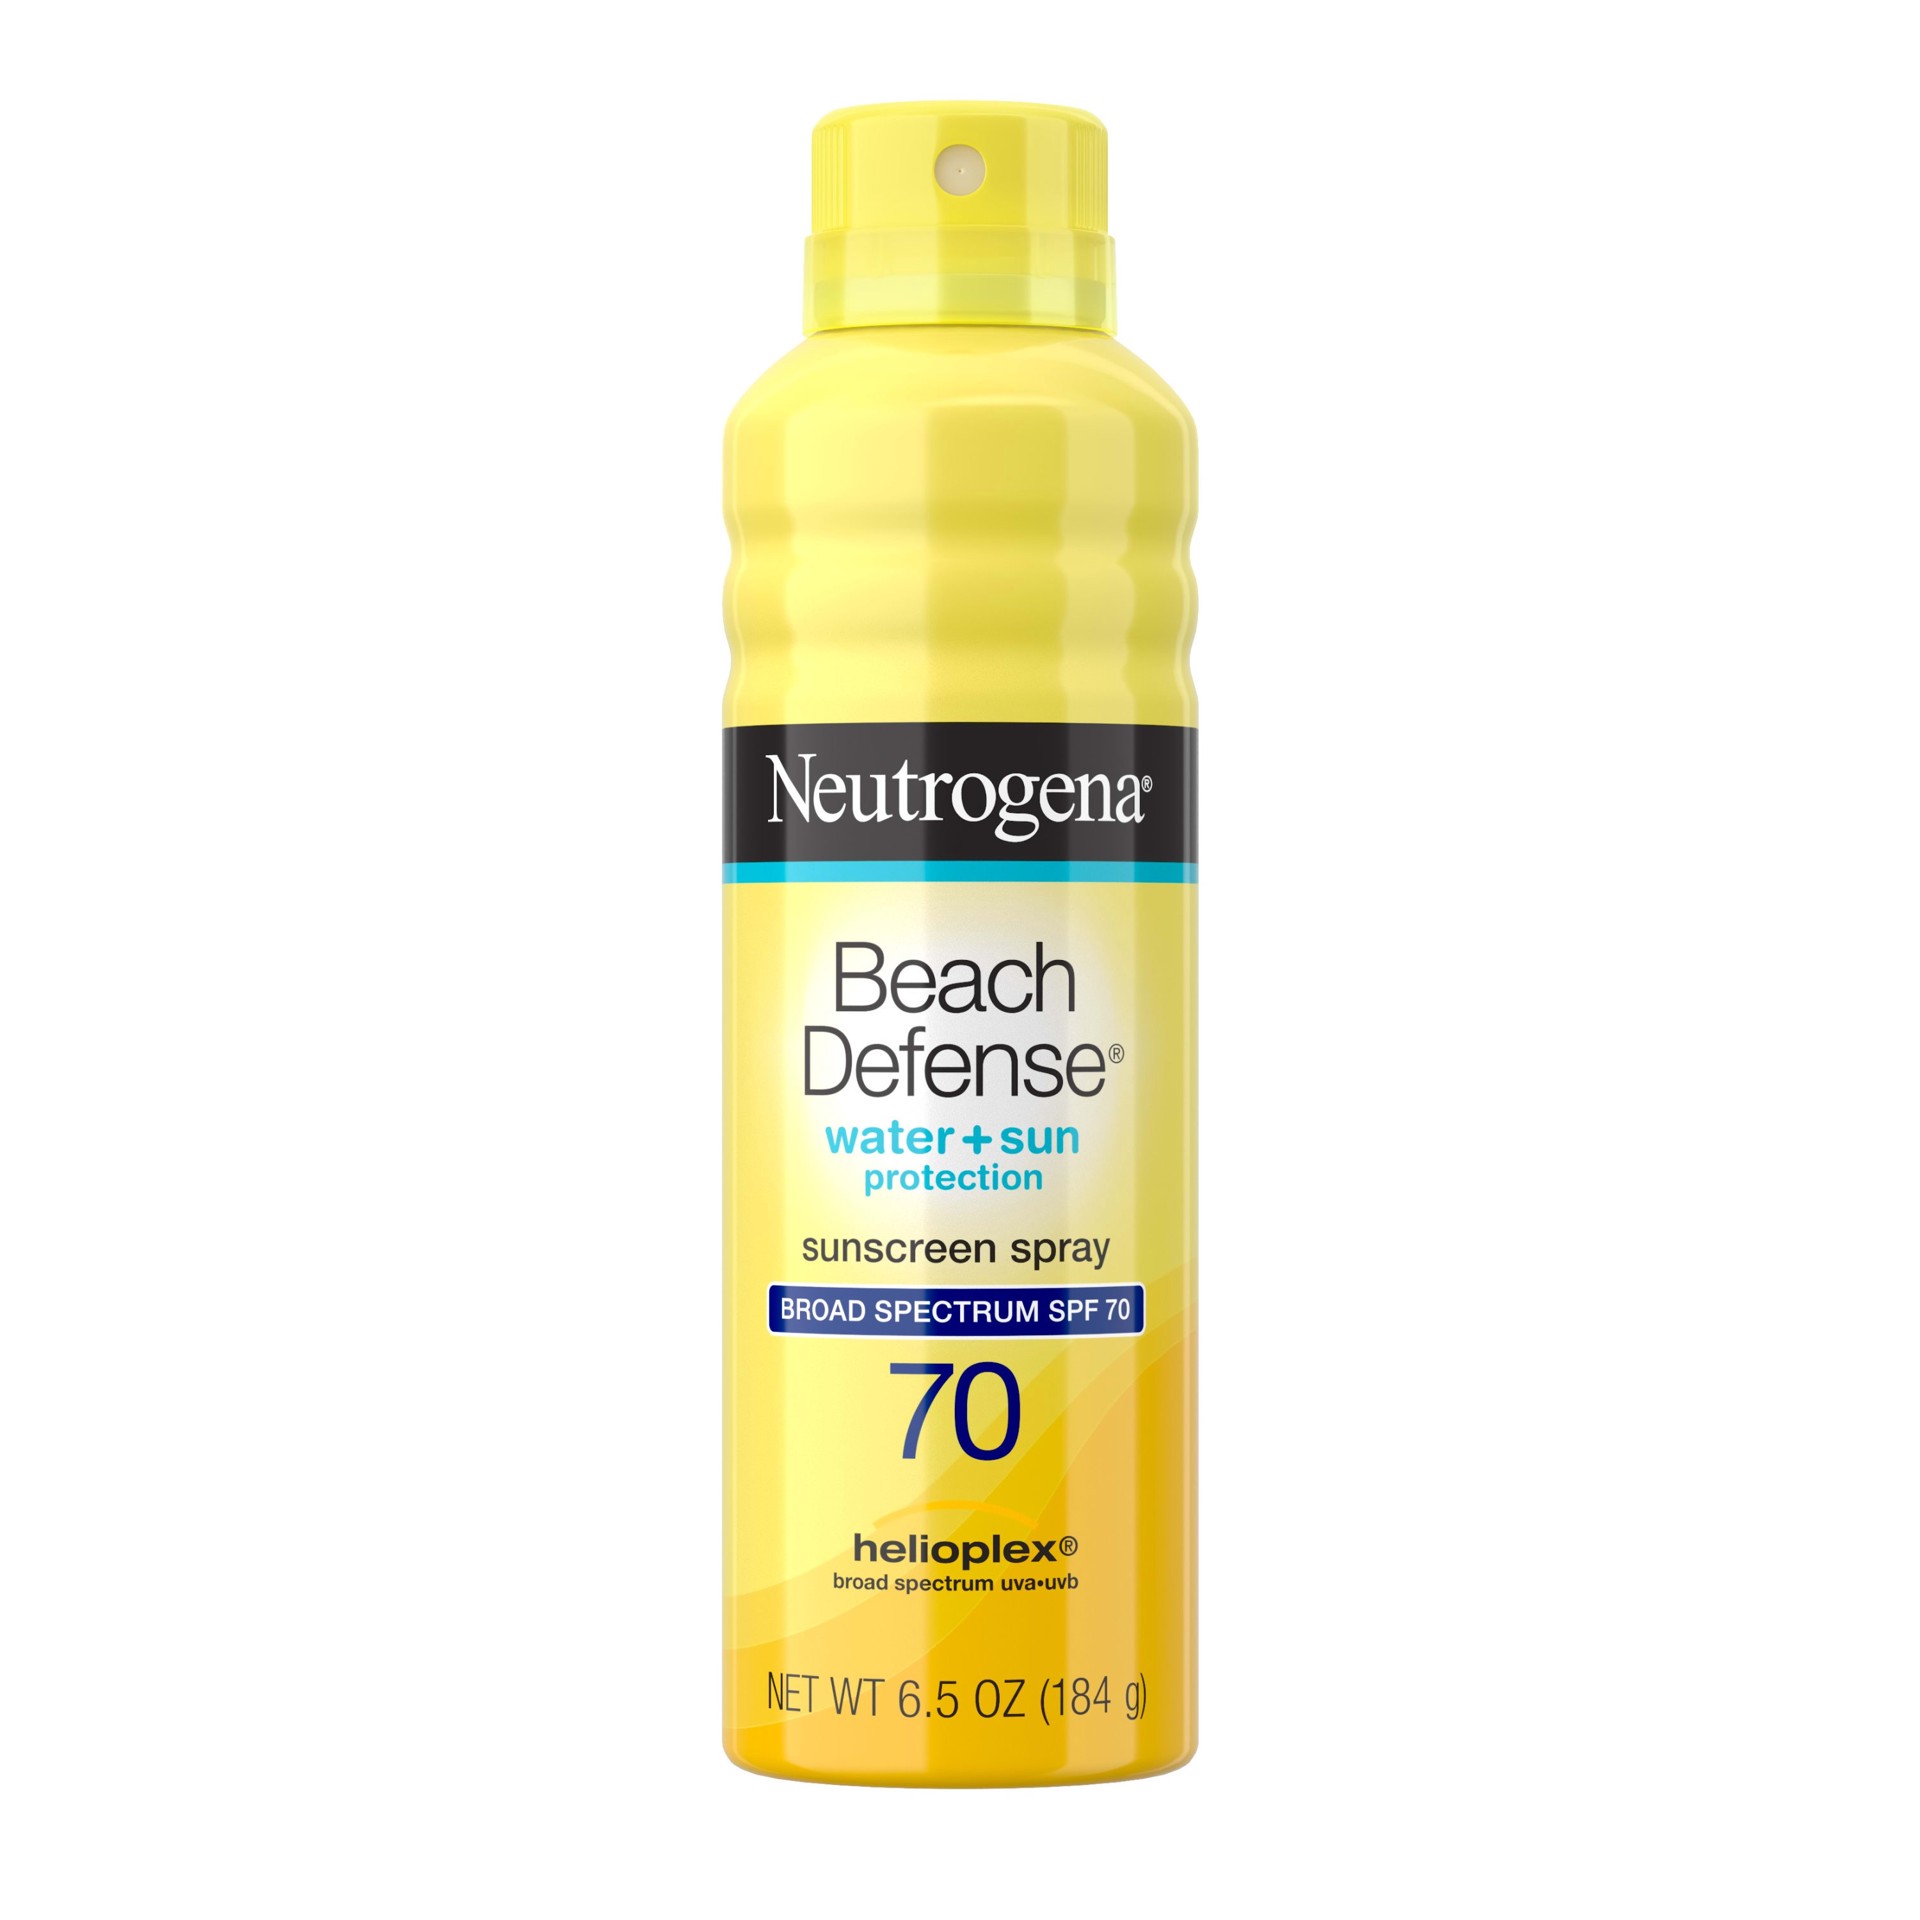 slide 1 of 8, Neutrogena Beach Defense Spray Sunscreen with Broad Spectrum SPF 70, Fast Absorbing Sunscreen Body Spray Mist, Water-Resistant UVA/UVB Sun Protection, Oxybenzone Free, 6.5 oz, 6.5 oz